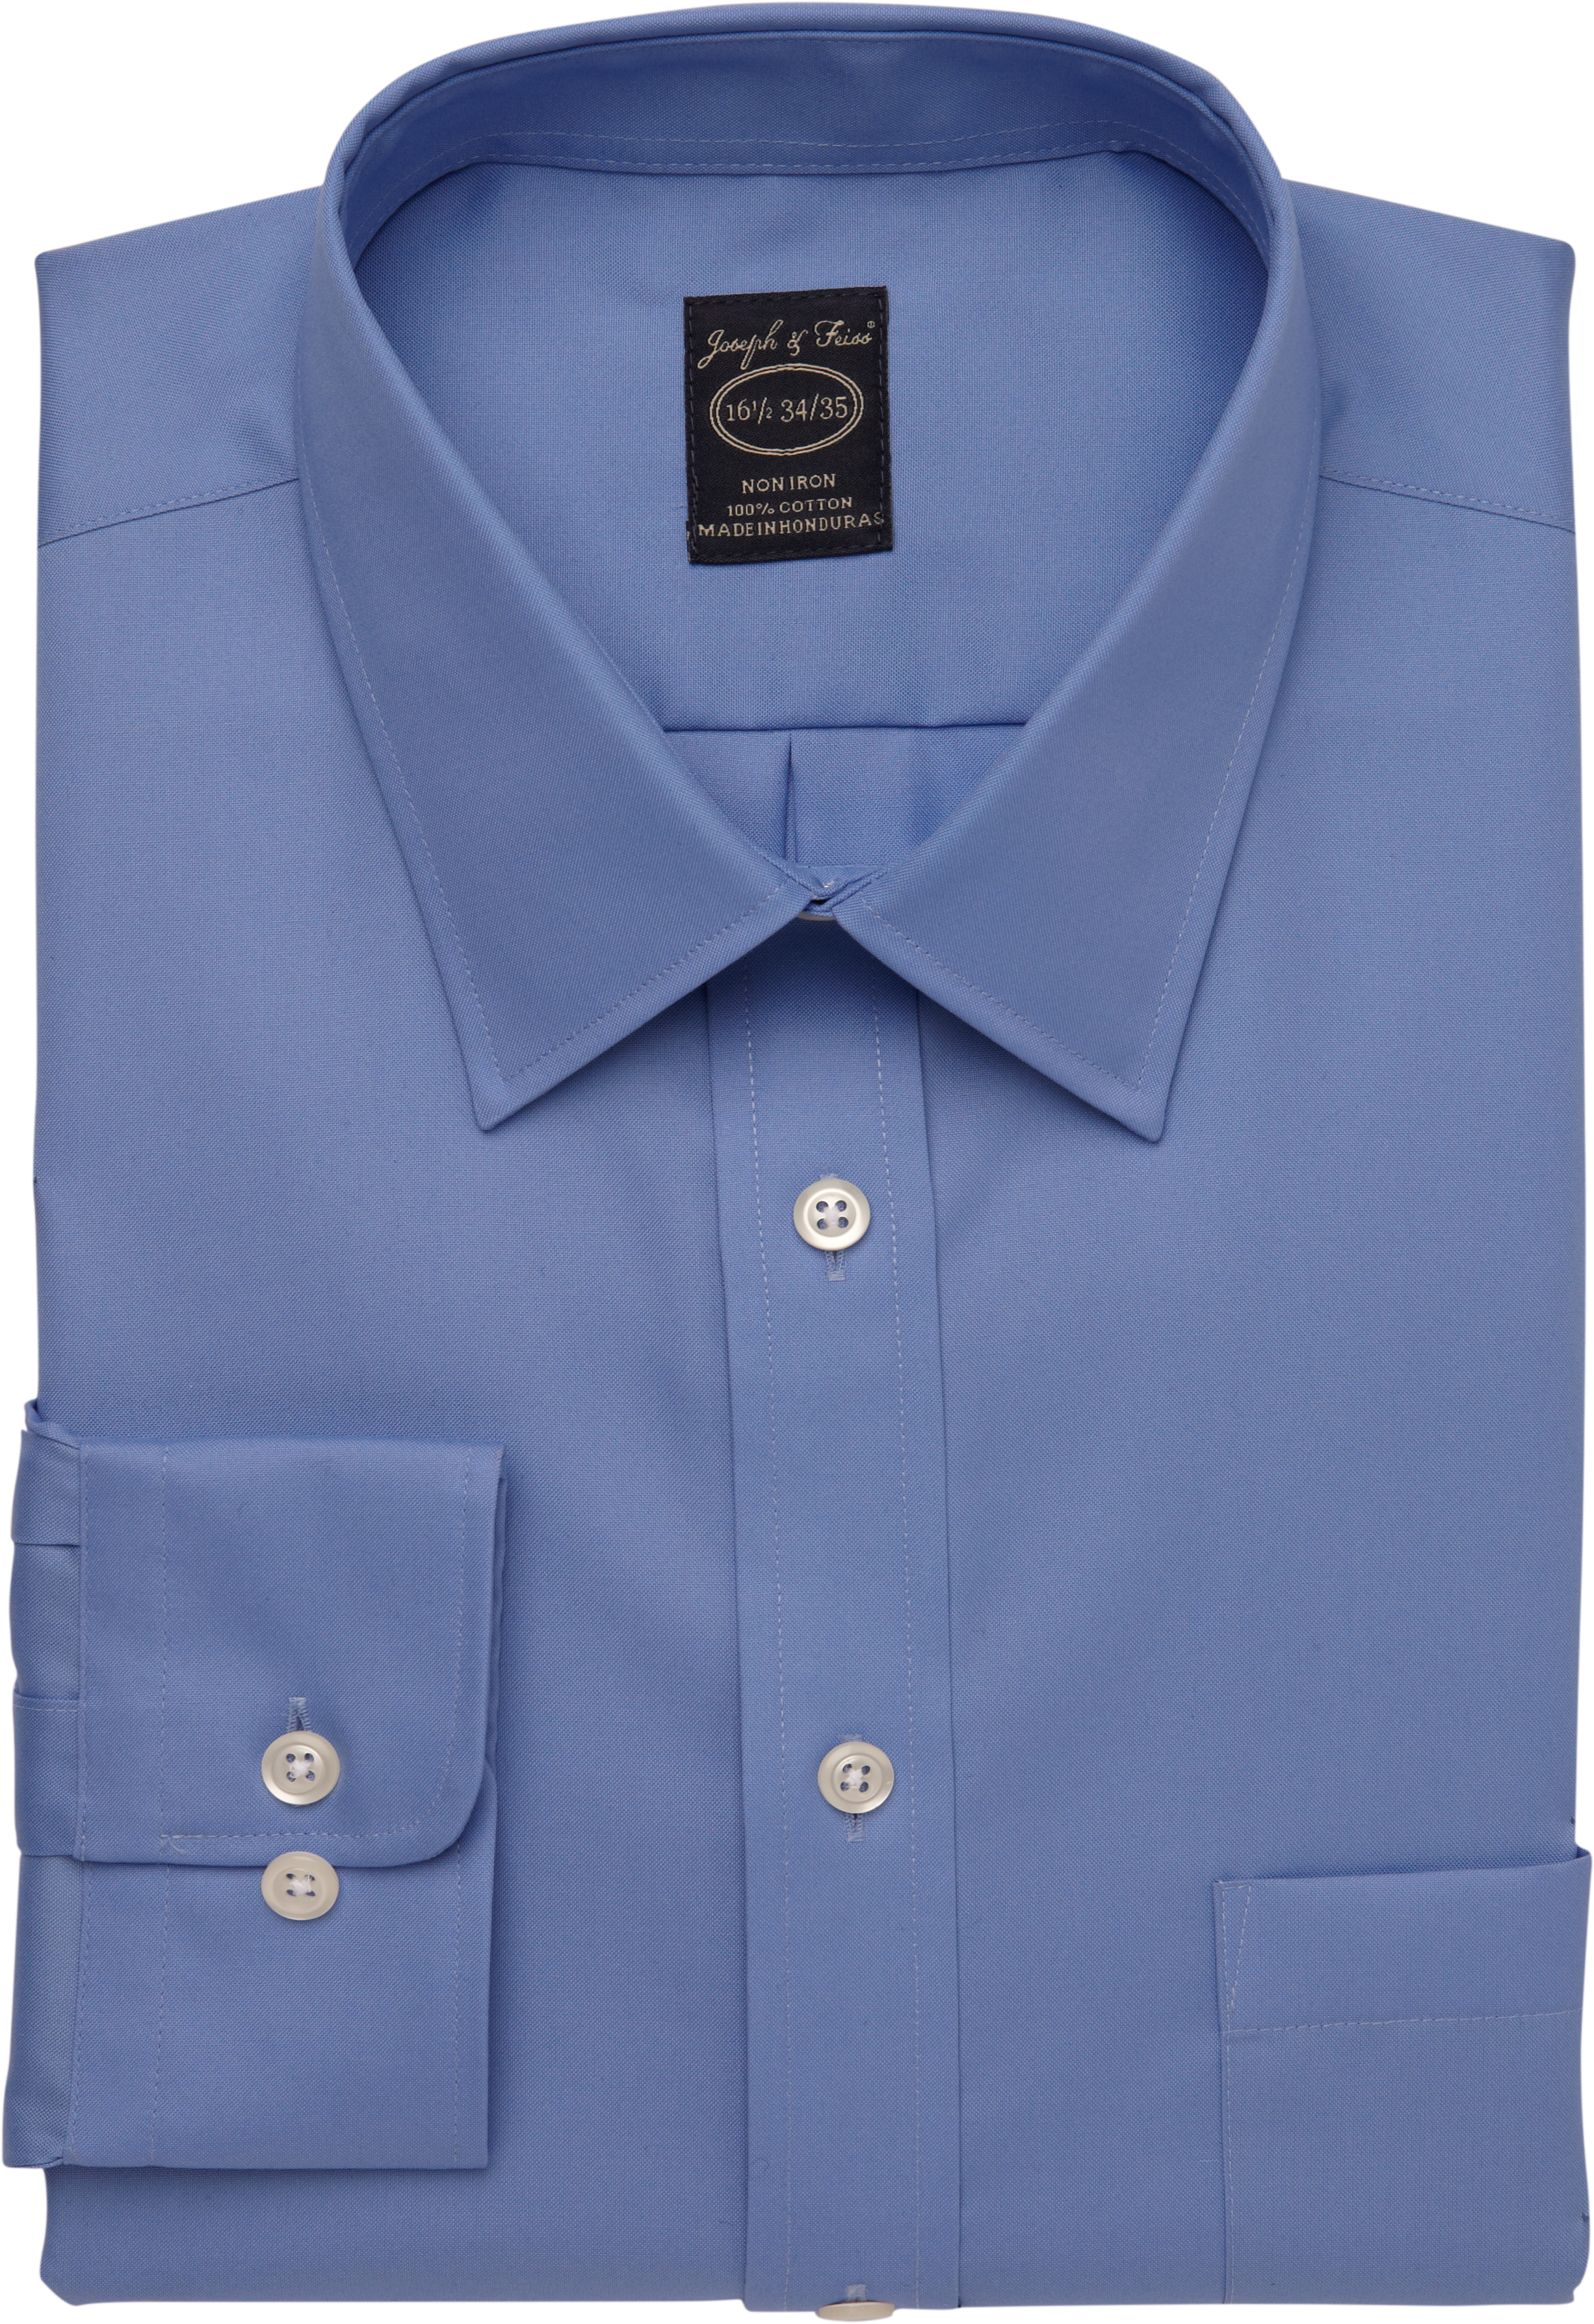 Joseph & Feiss Blue Non-Iron Dress Shirt - Men's Sale | Men's Wearhouse